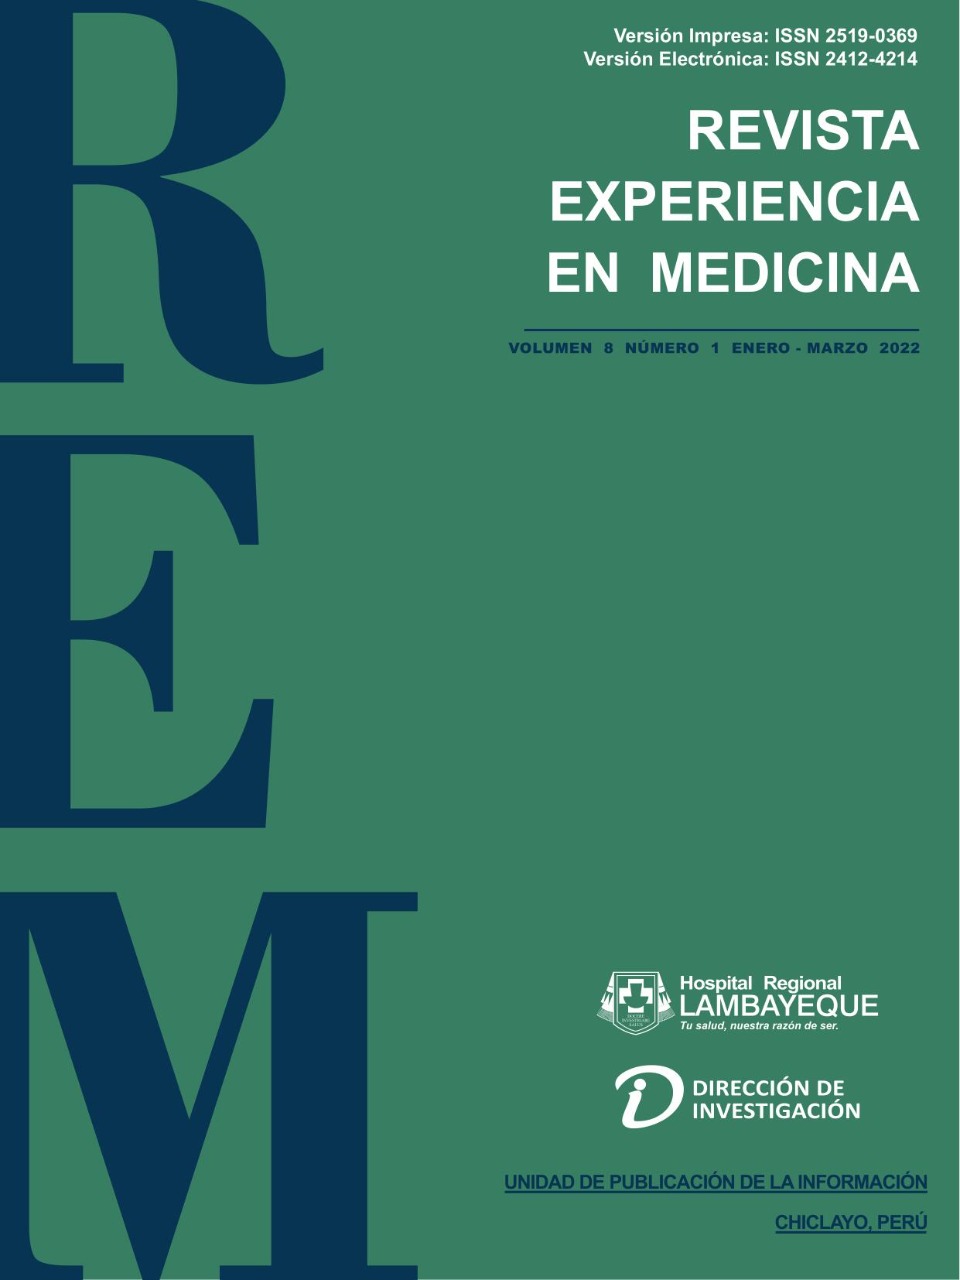 					Ver Vol. 8 Núm. 1 (2022): Revista Experiencia en Medicina del Hospital Regional Lambayeque
				